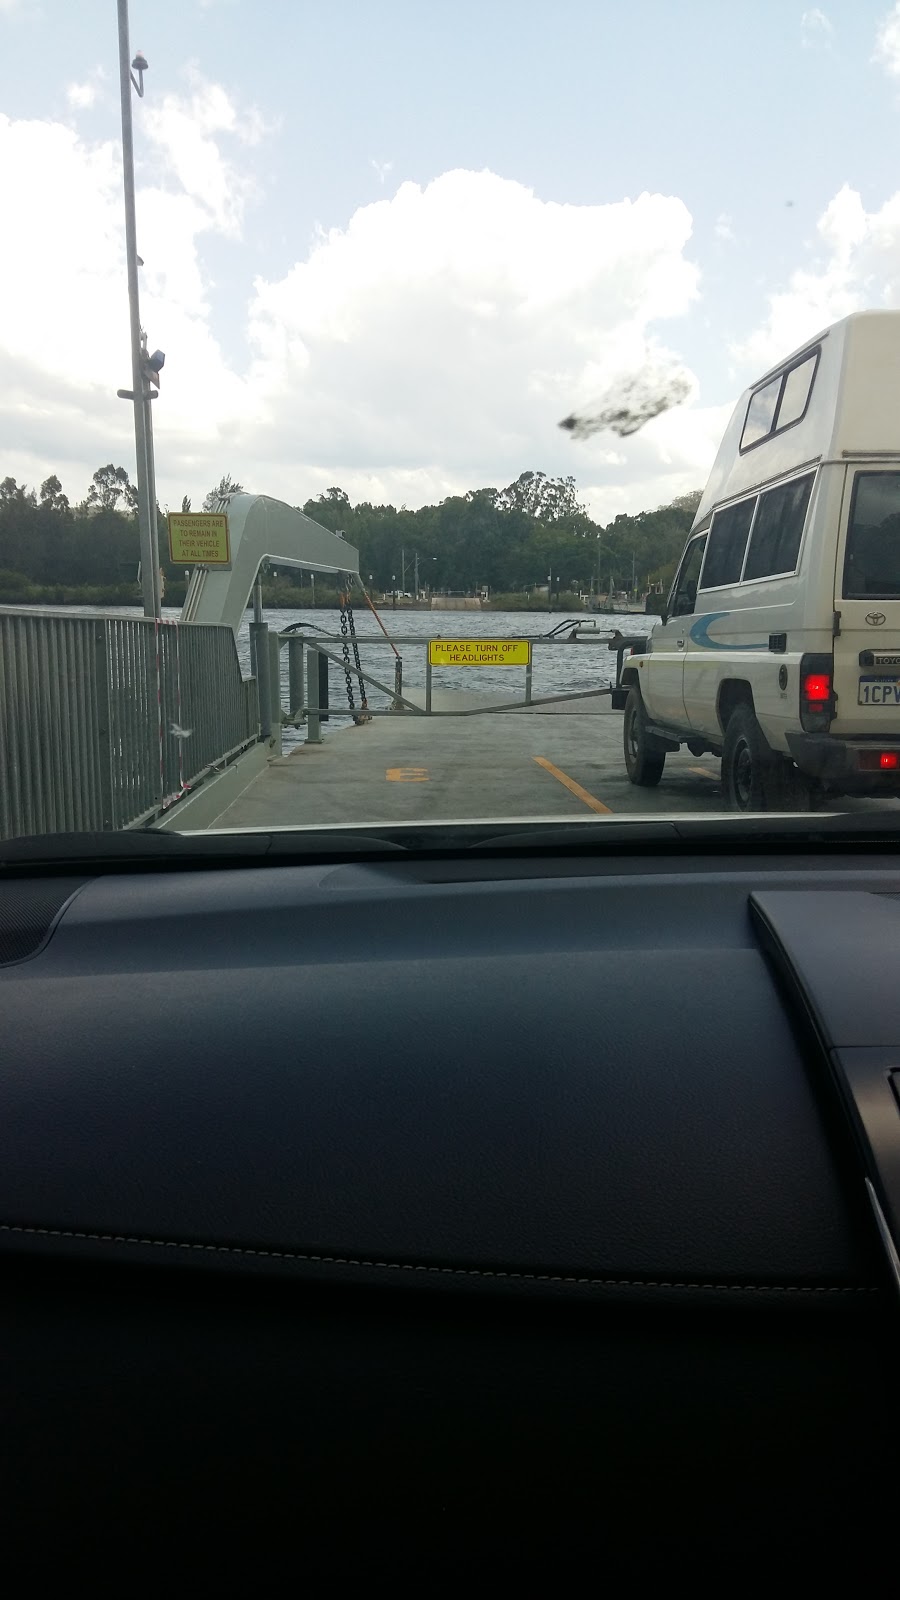 Wisemans Ferry Grocer | 2 Old Northern Rd, Wisemans Ferry NSW 2775, Australia | Phone: (02) 4566 4612